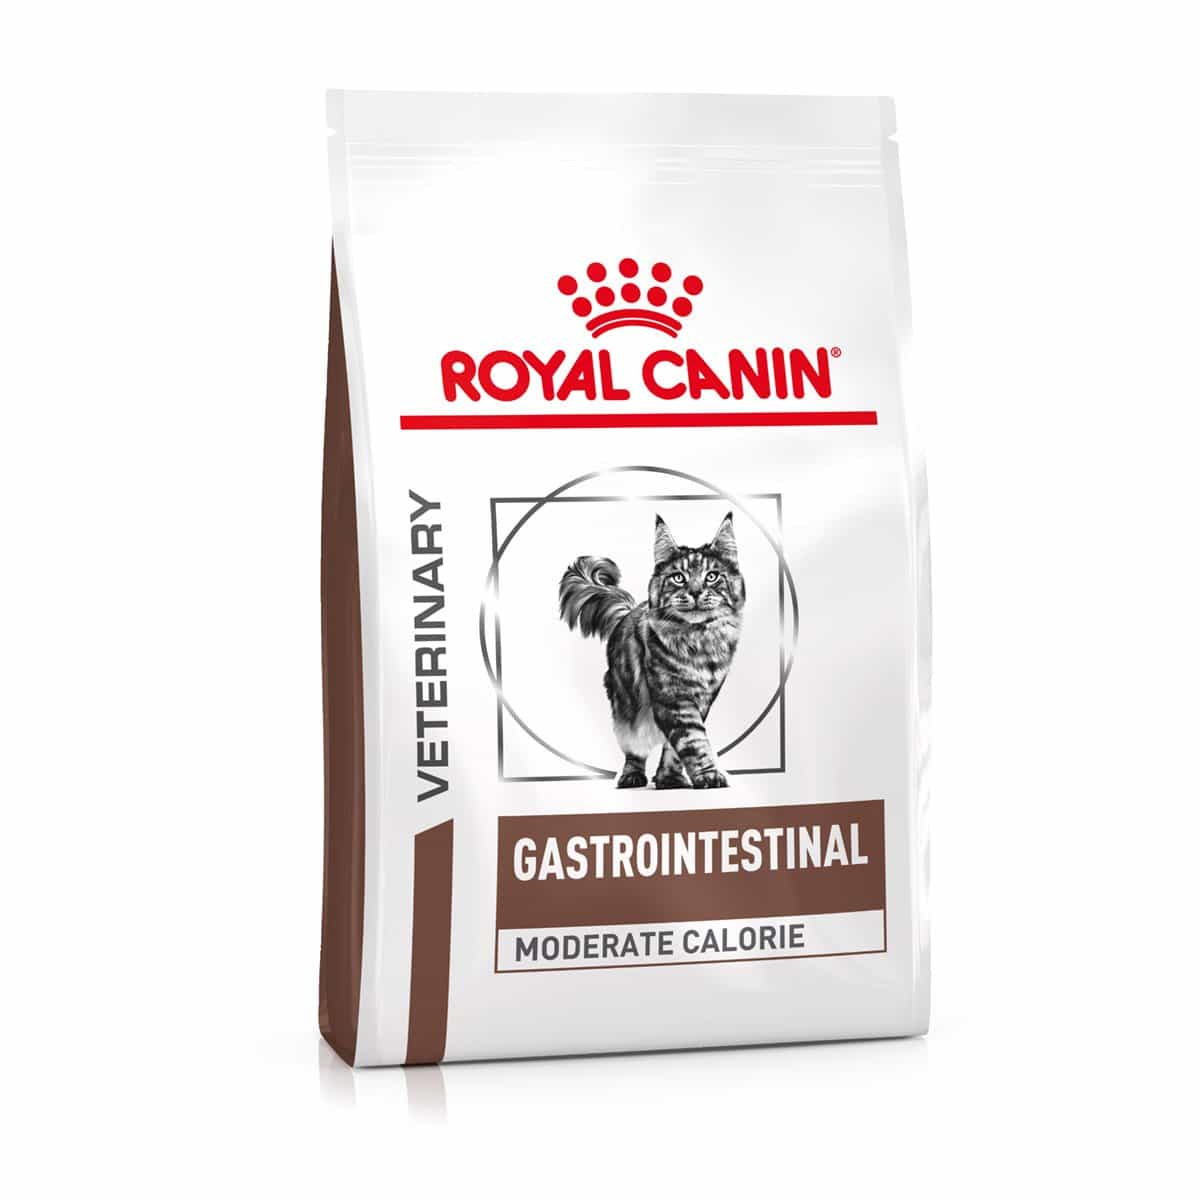 ROYAL CANIN® Veterinary GASTROINTESTINAL MODERATE CALORIE Trockenfutter für Katzen 4kg